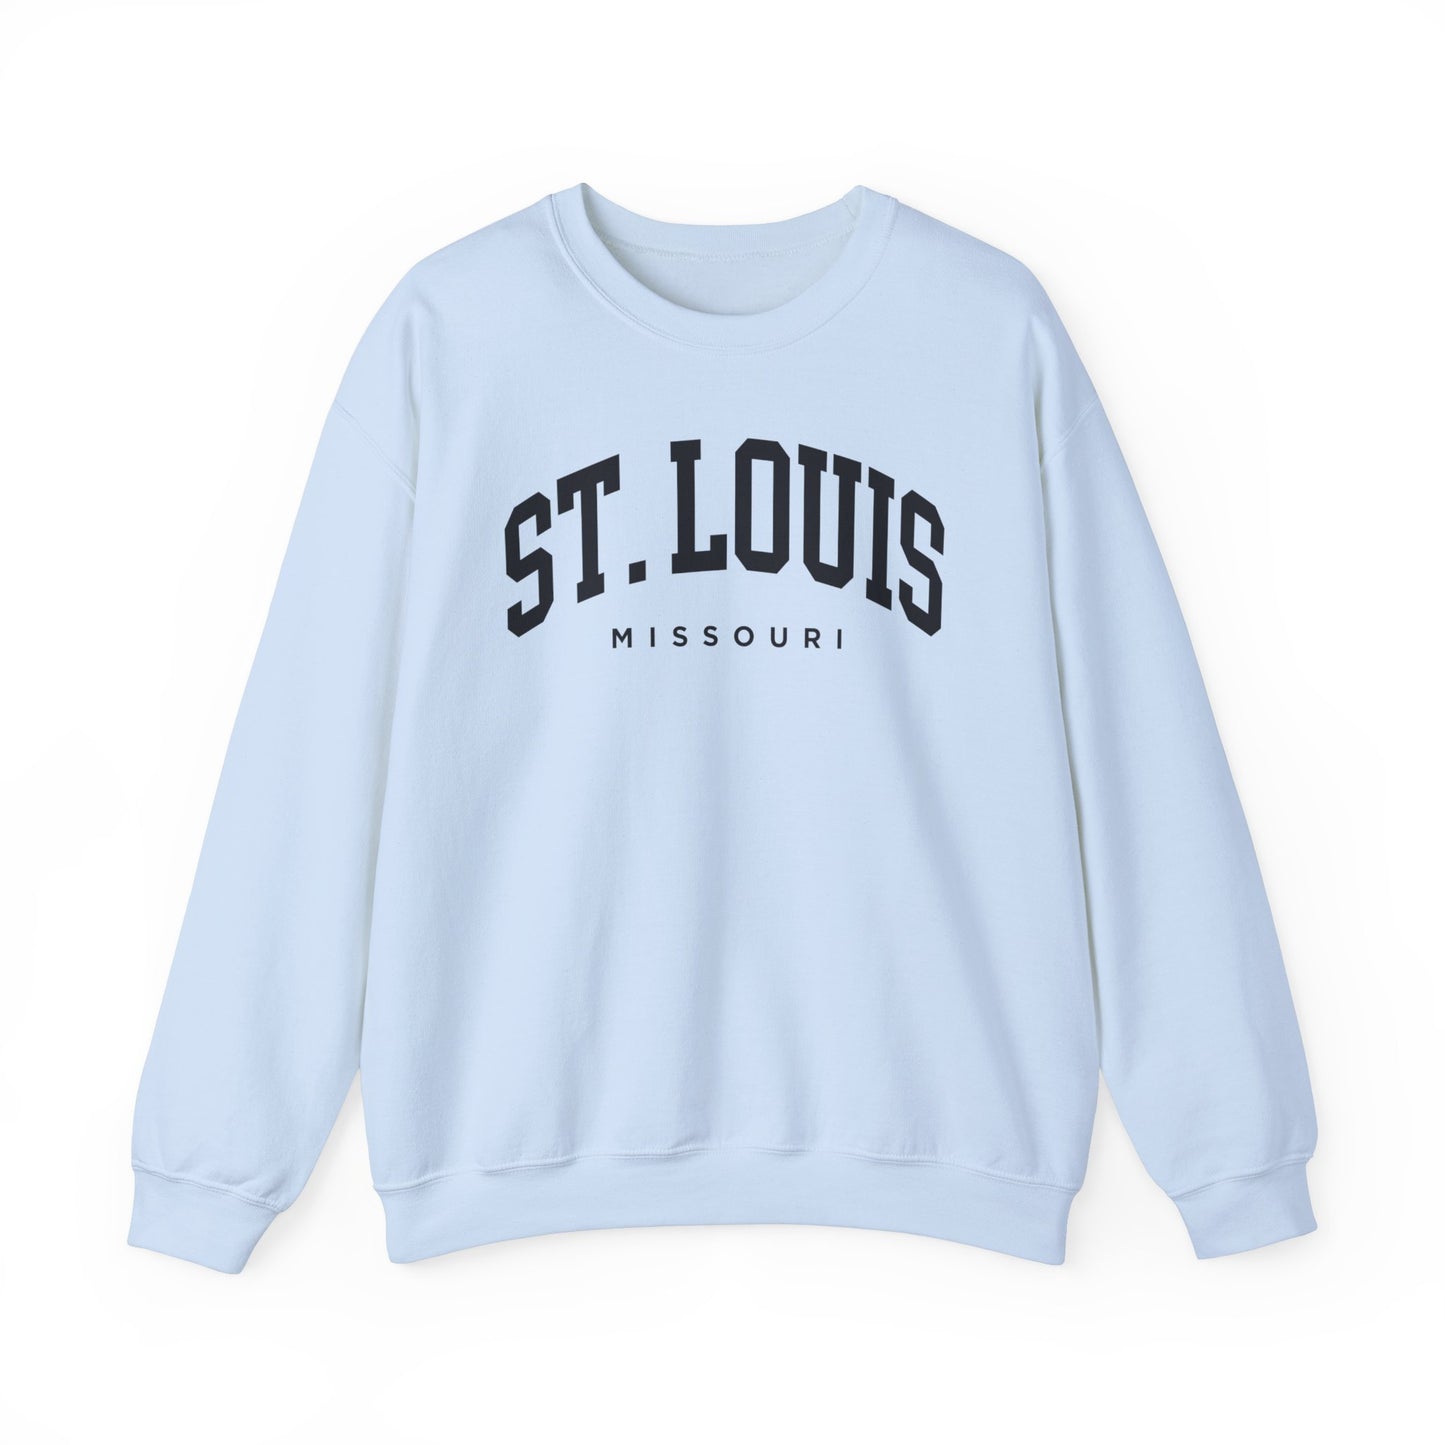 St. Louis Missouri Sweatshirt